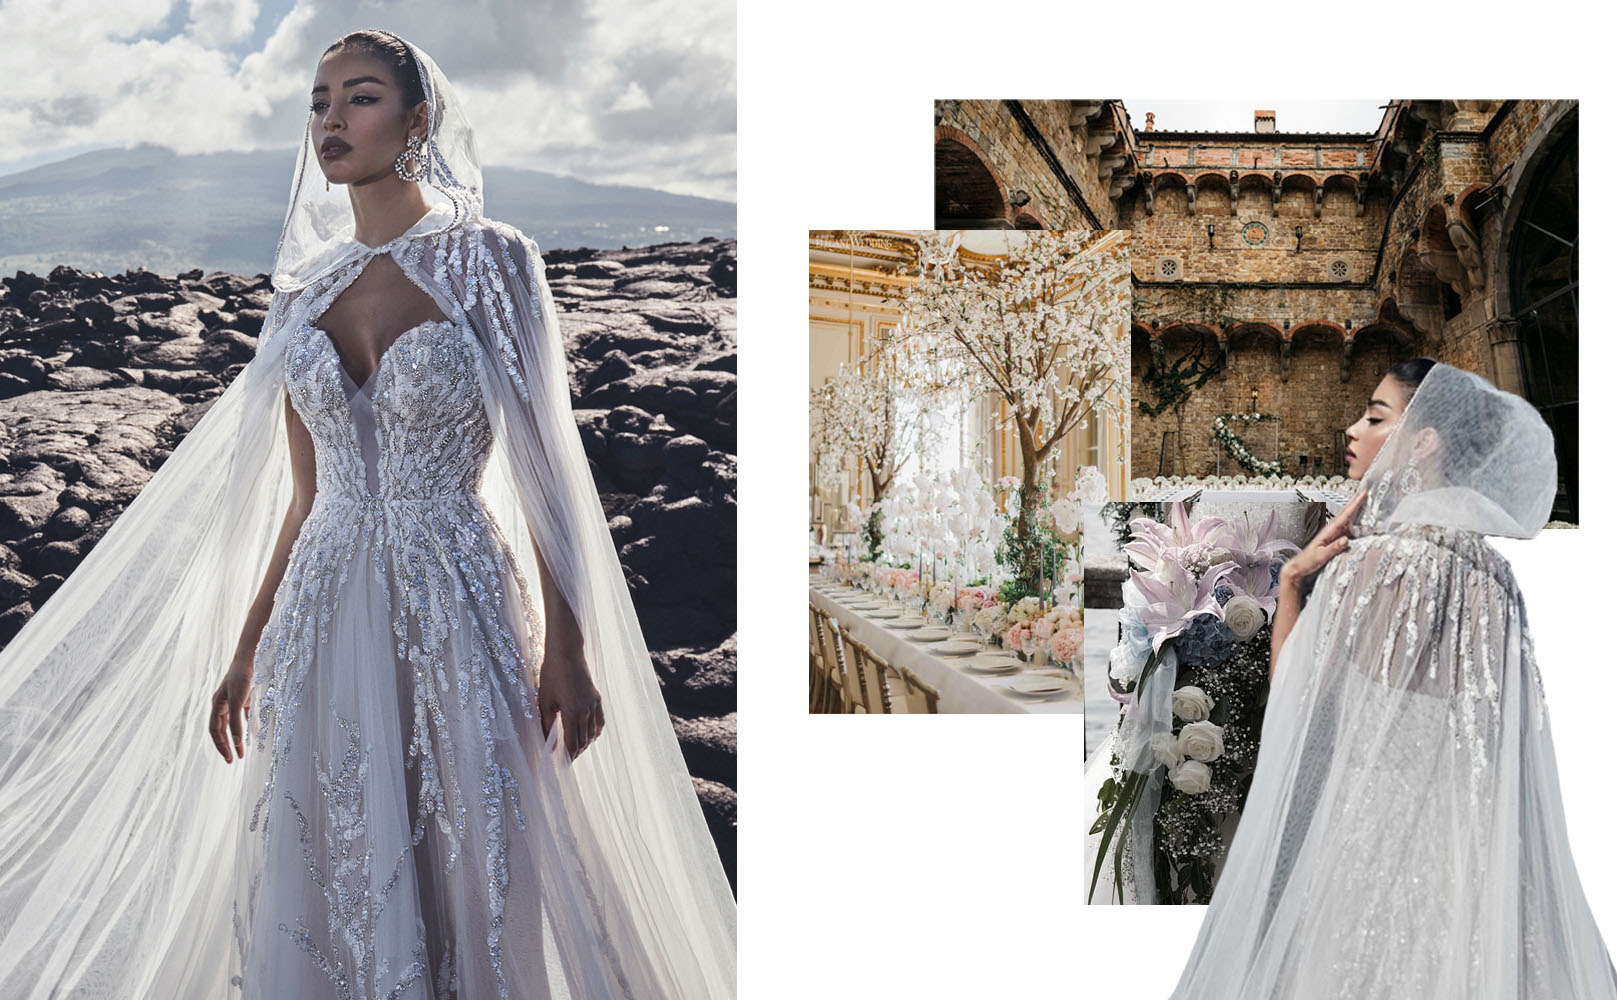 Julia by Calla Blanche 2021 Fantasy Princess Bridal Dress Fairytale Wedding Gown Online Australia at Fashionably Yours Bridal